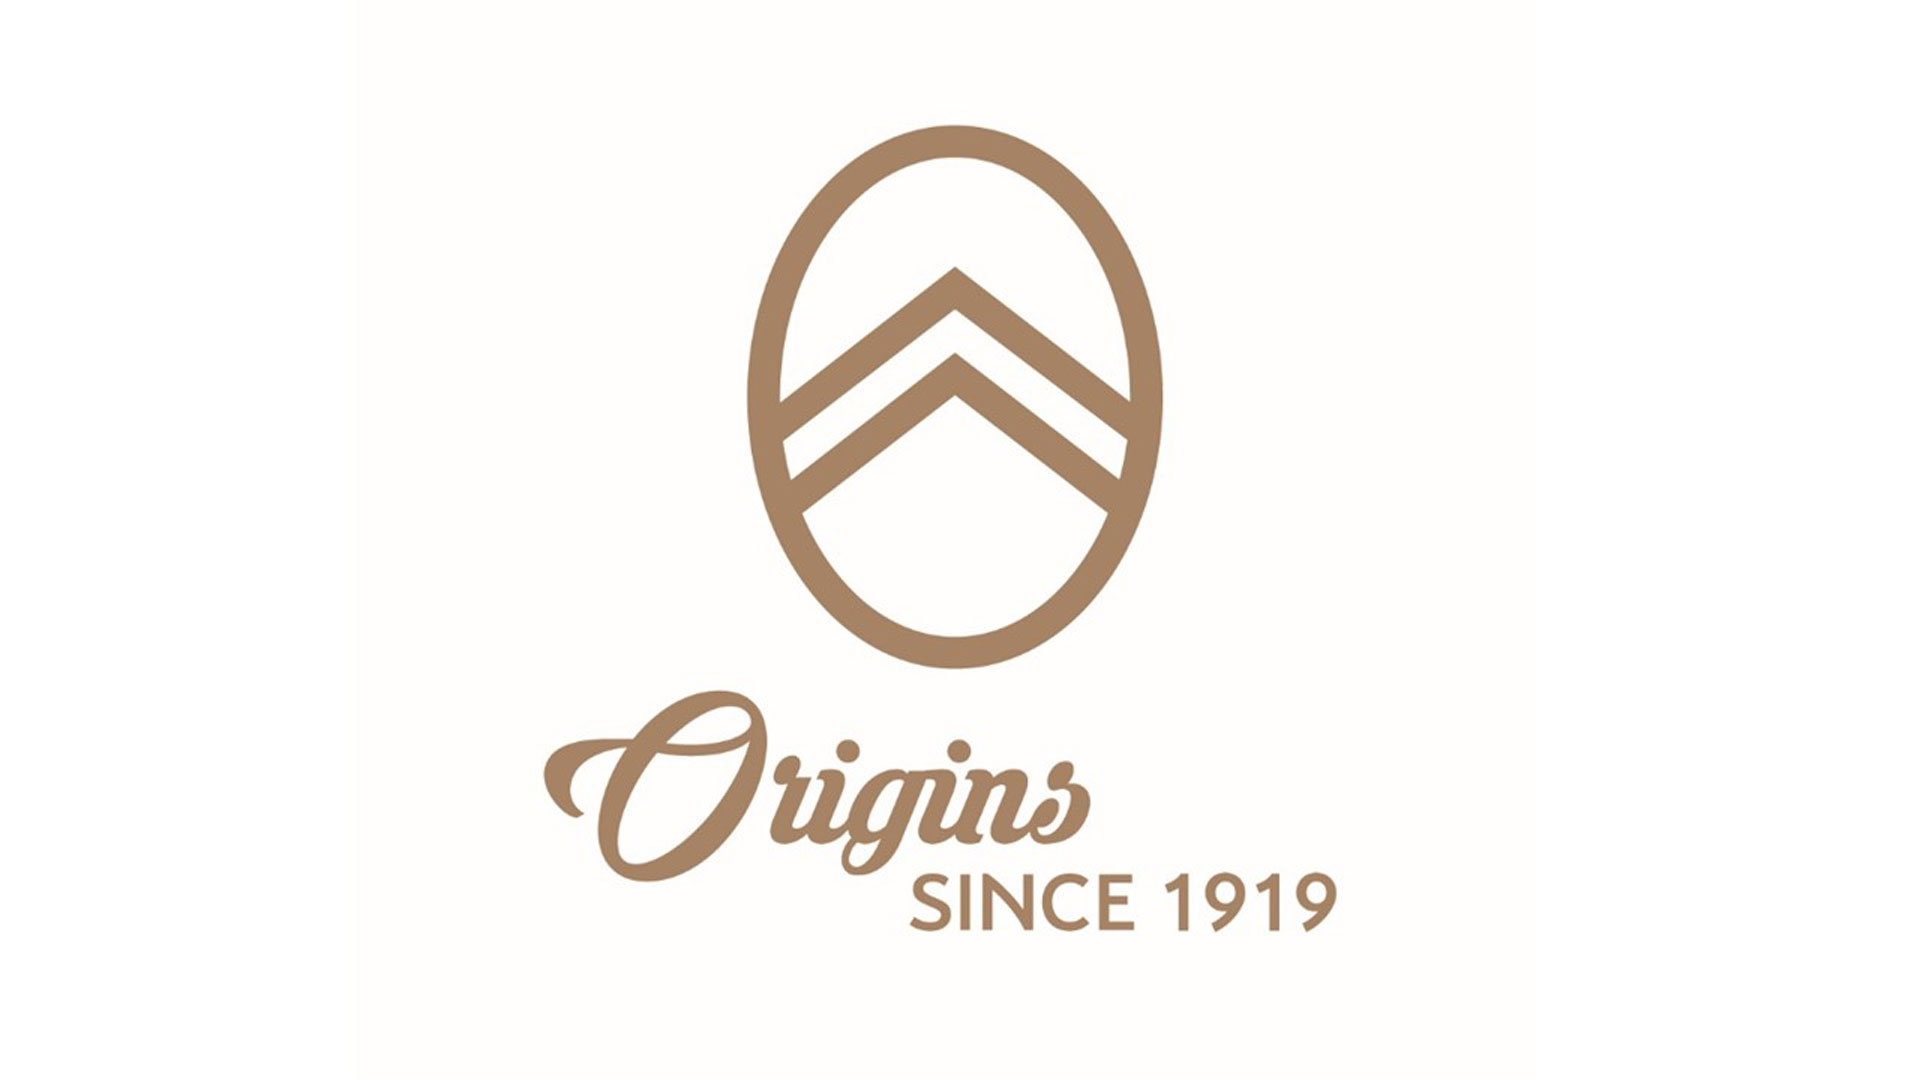 Citroen Origins logo